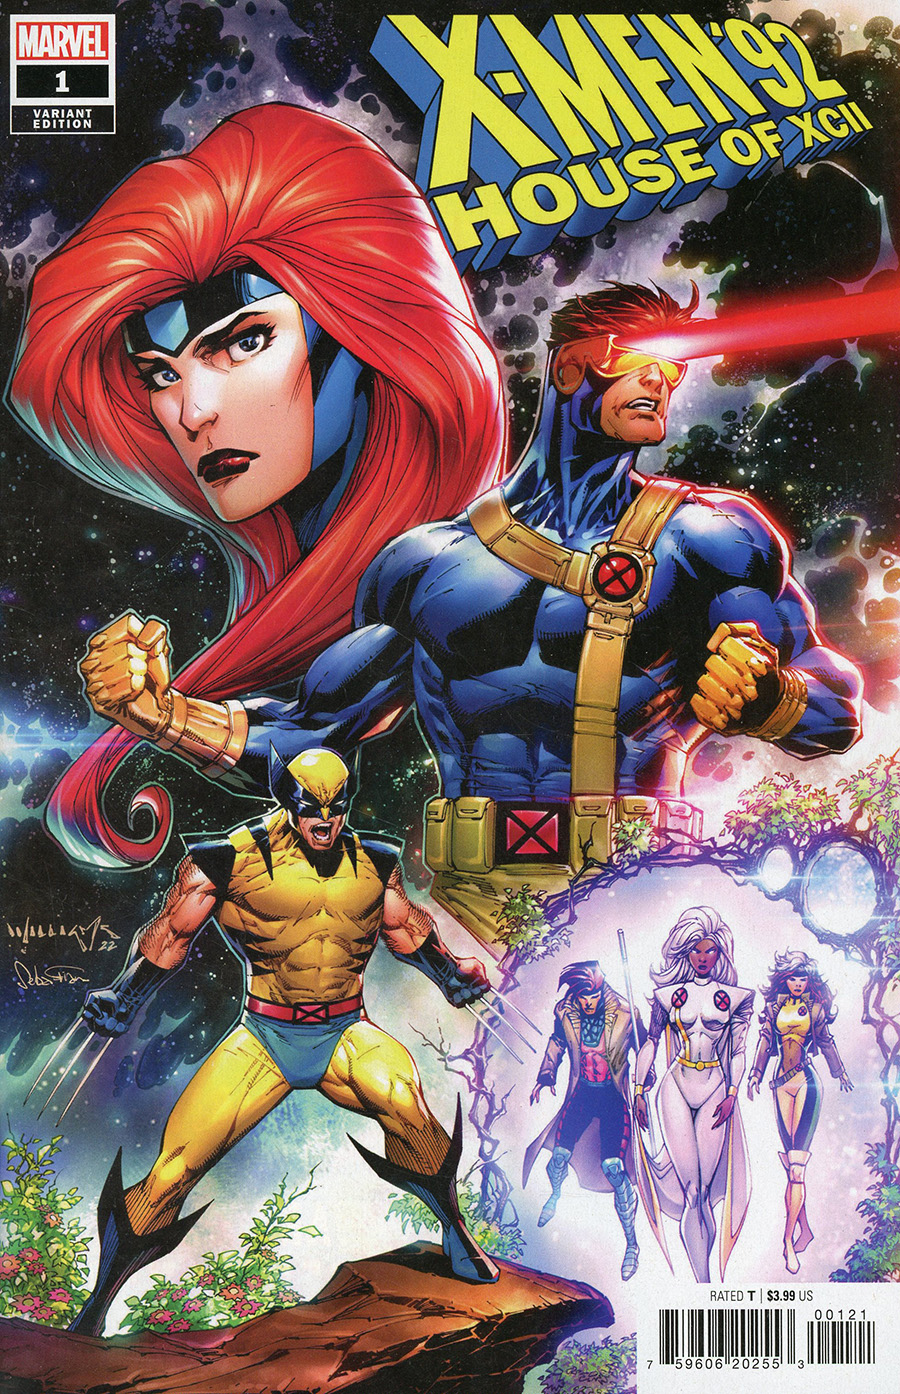 X-Men 92 House Of XCII #1 Cover B Variant Scott Williams Cover